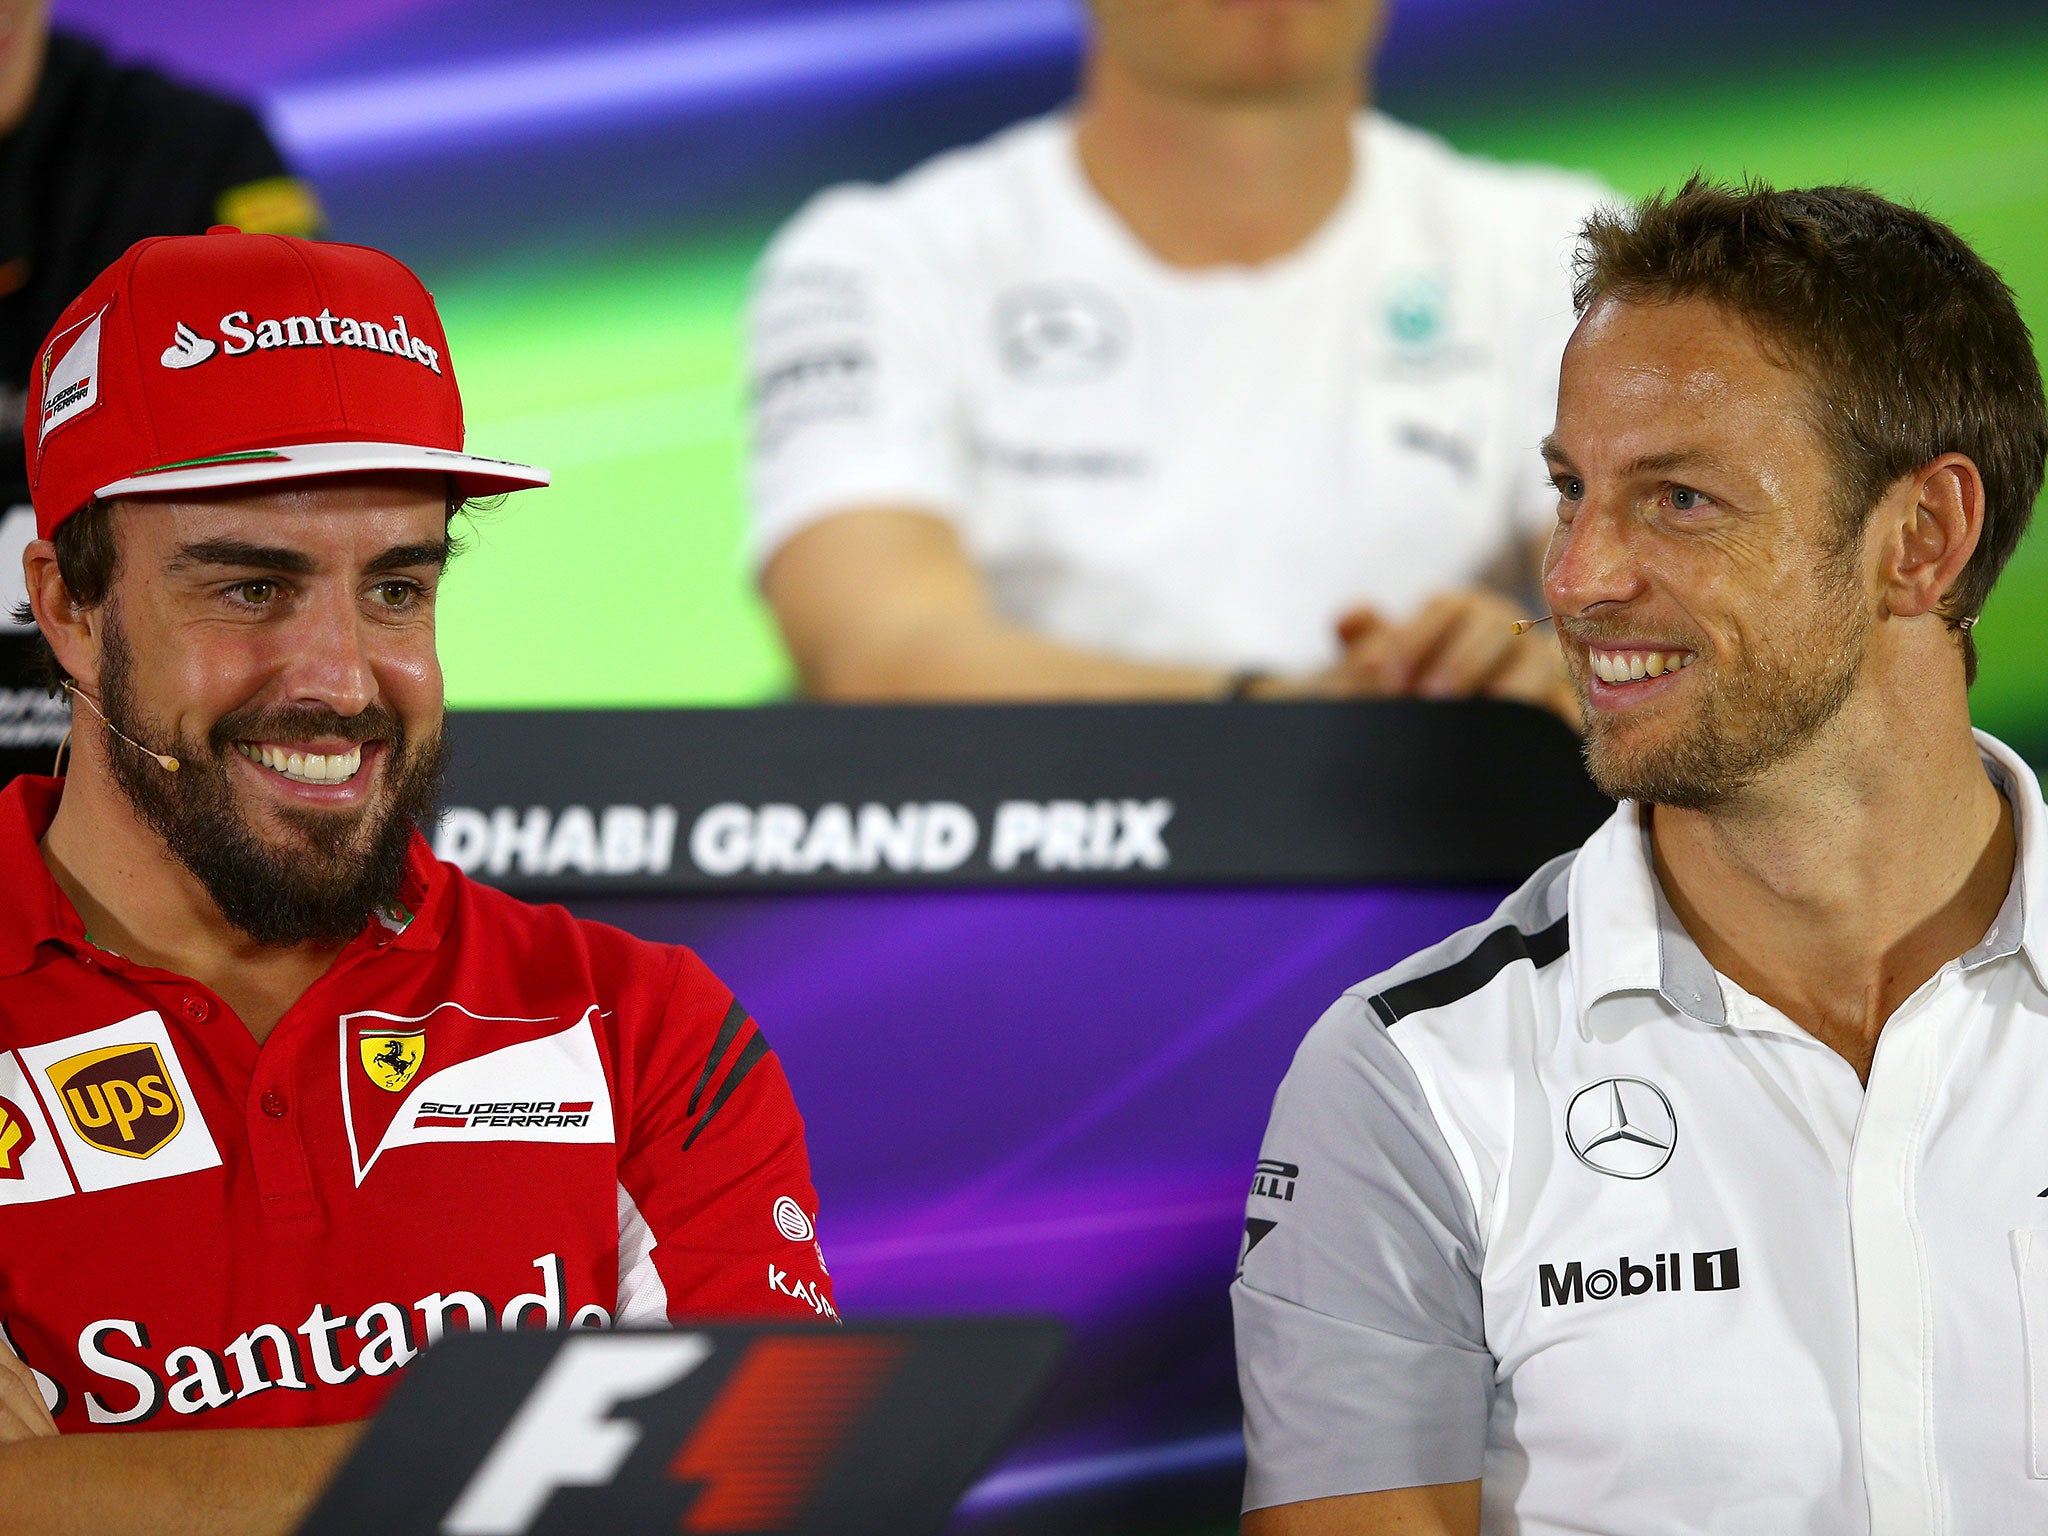 Fernando Alonso and Jenson Button will drive for McLaren next season